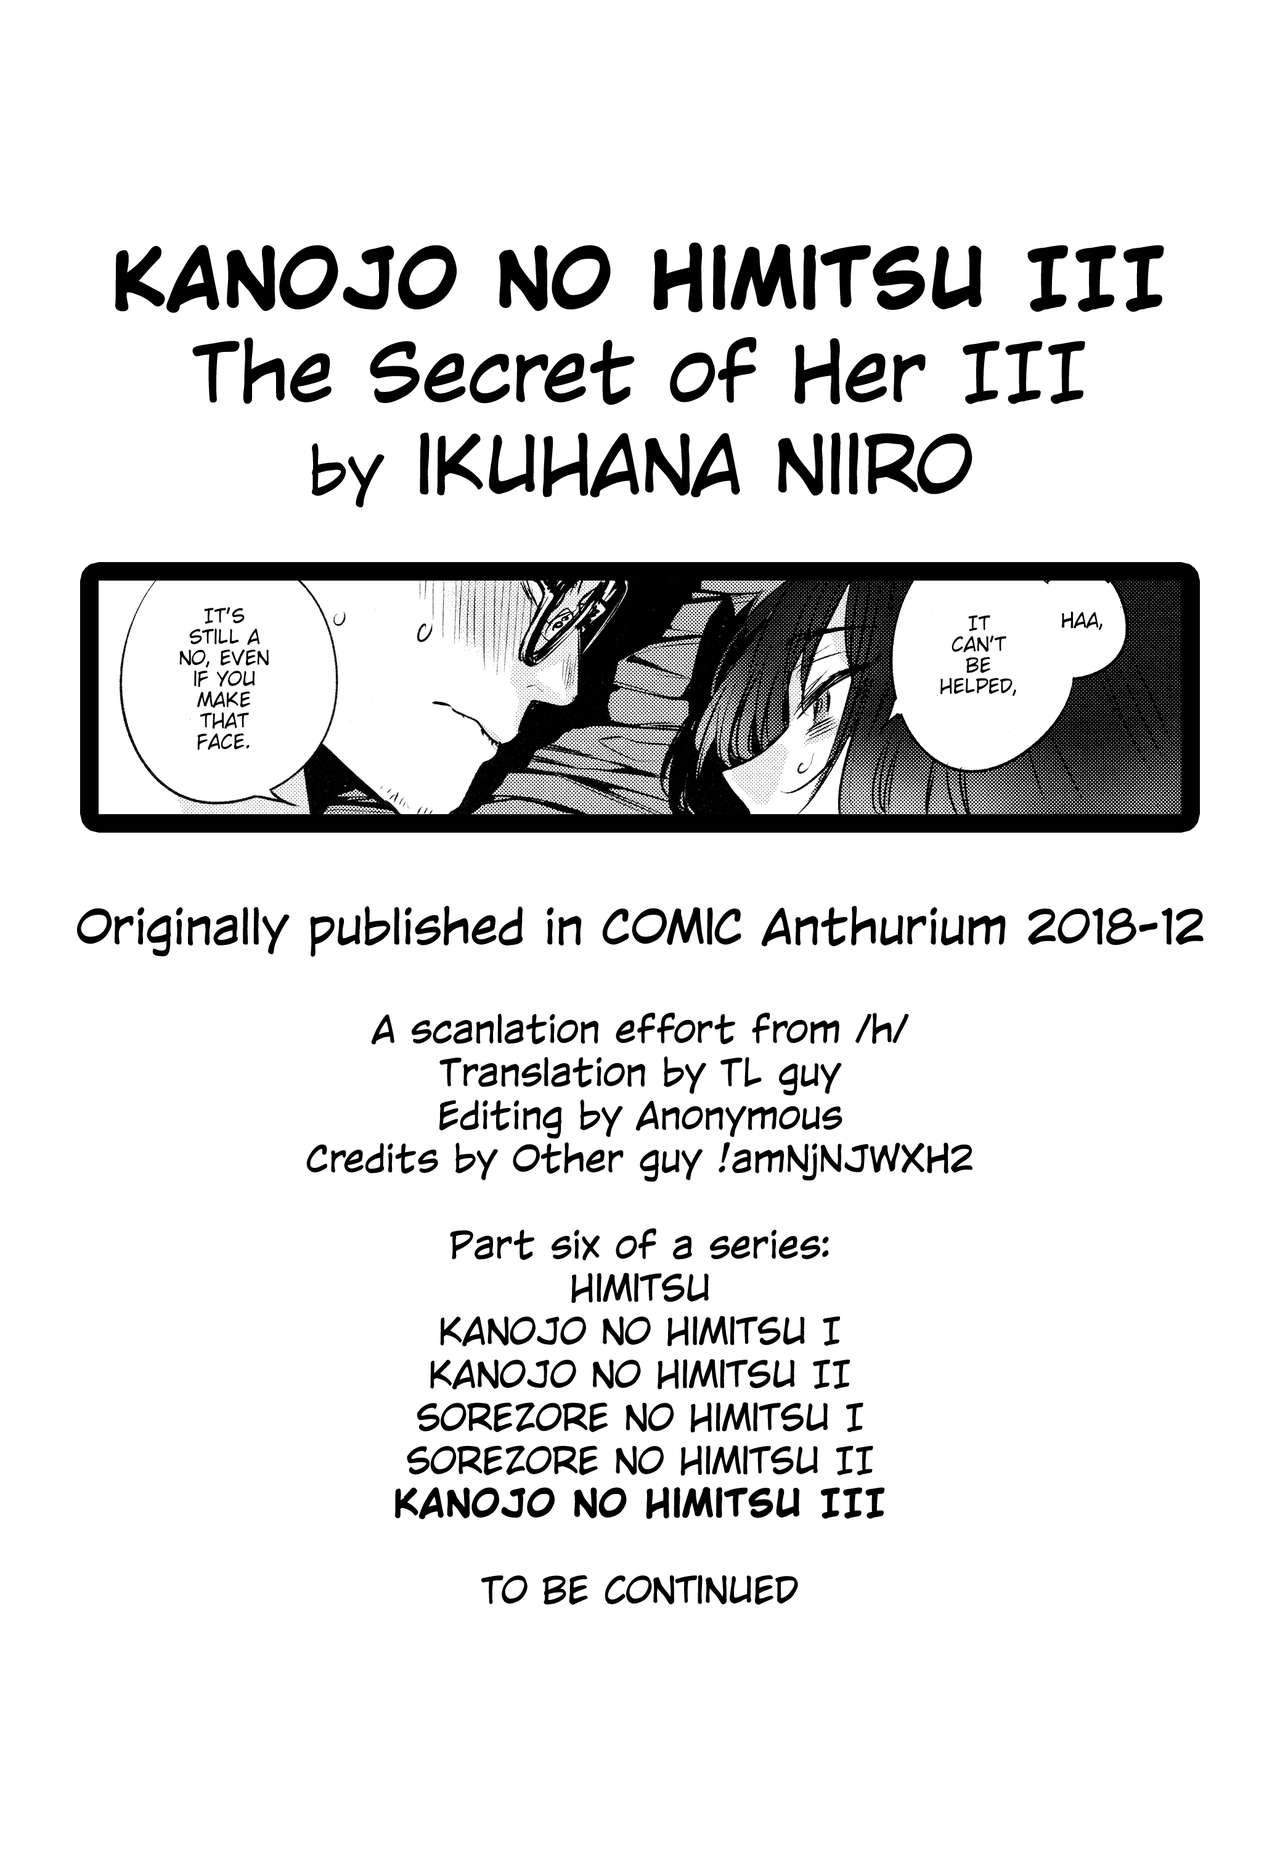 Kanojo no Himitsu III - The Secret of Her III 20